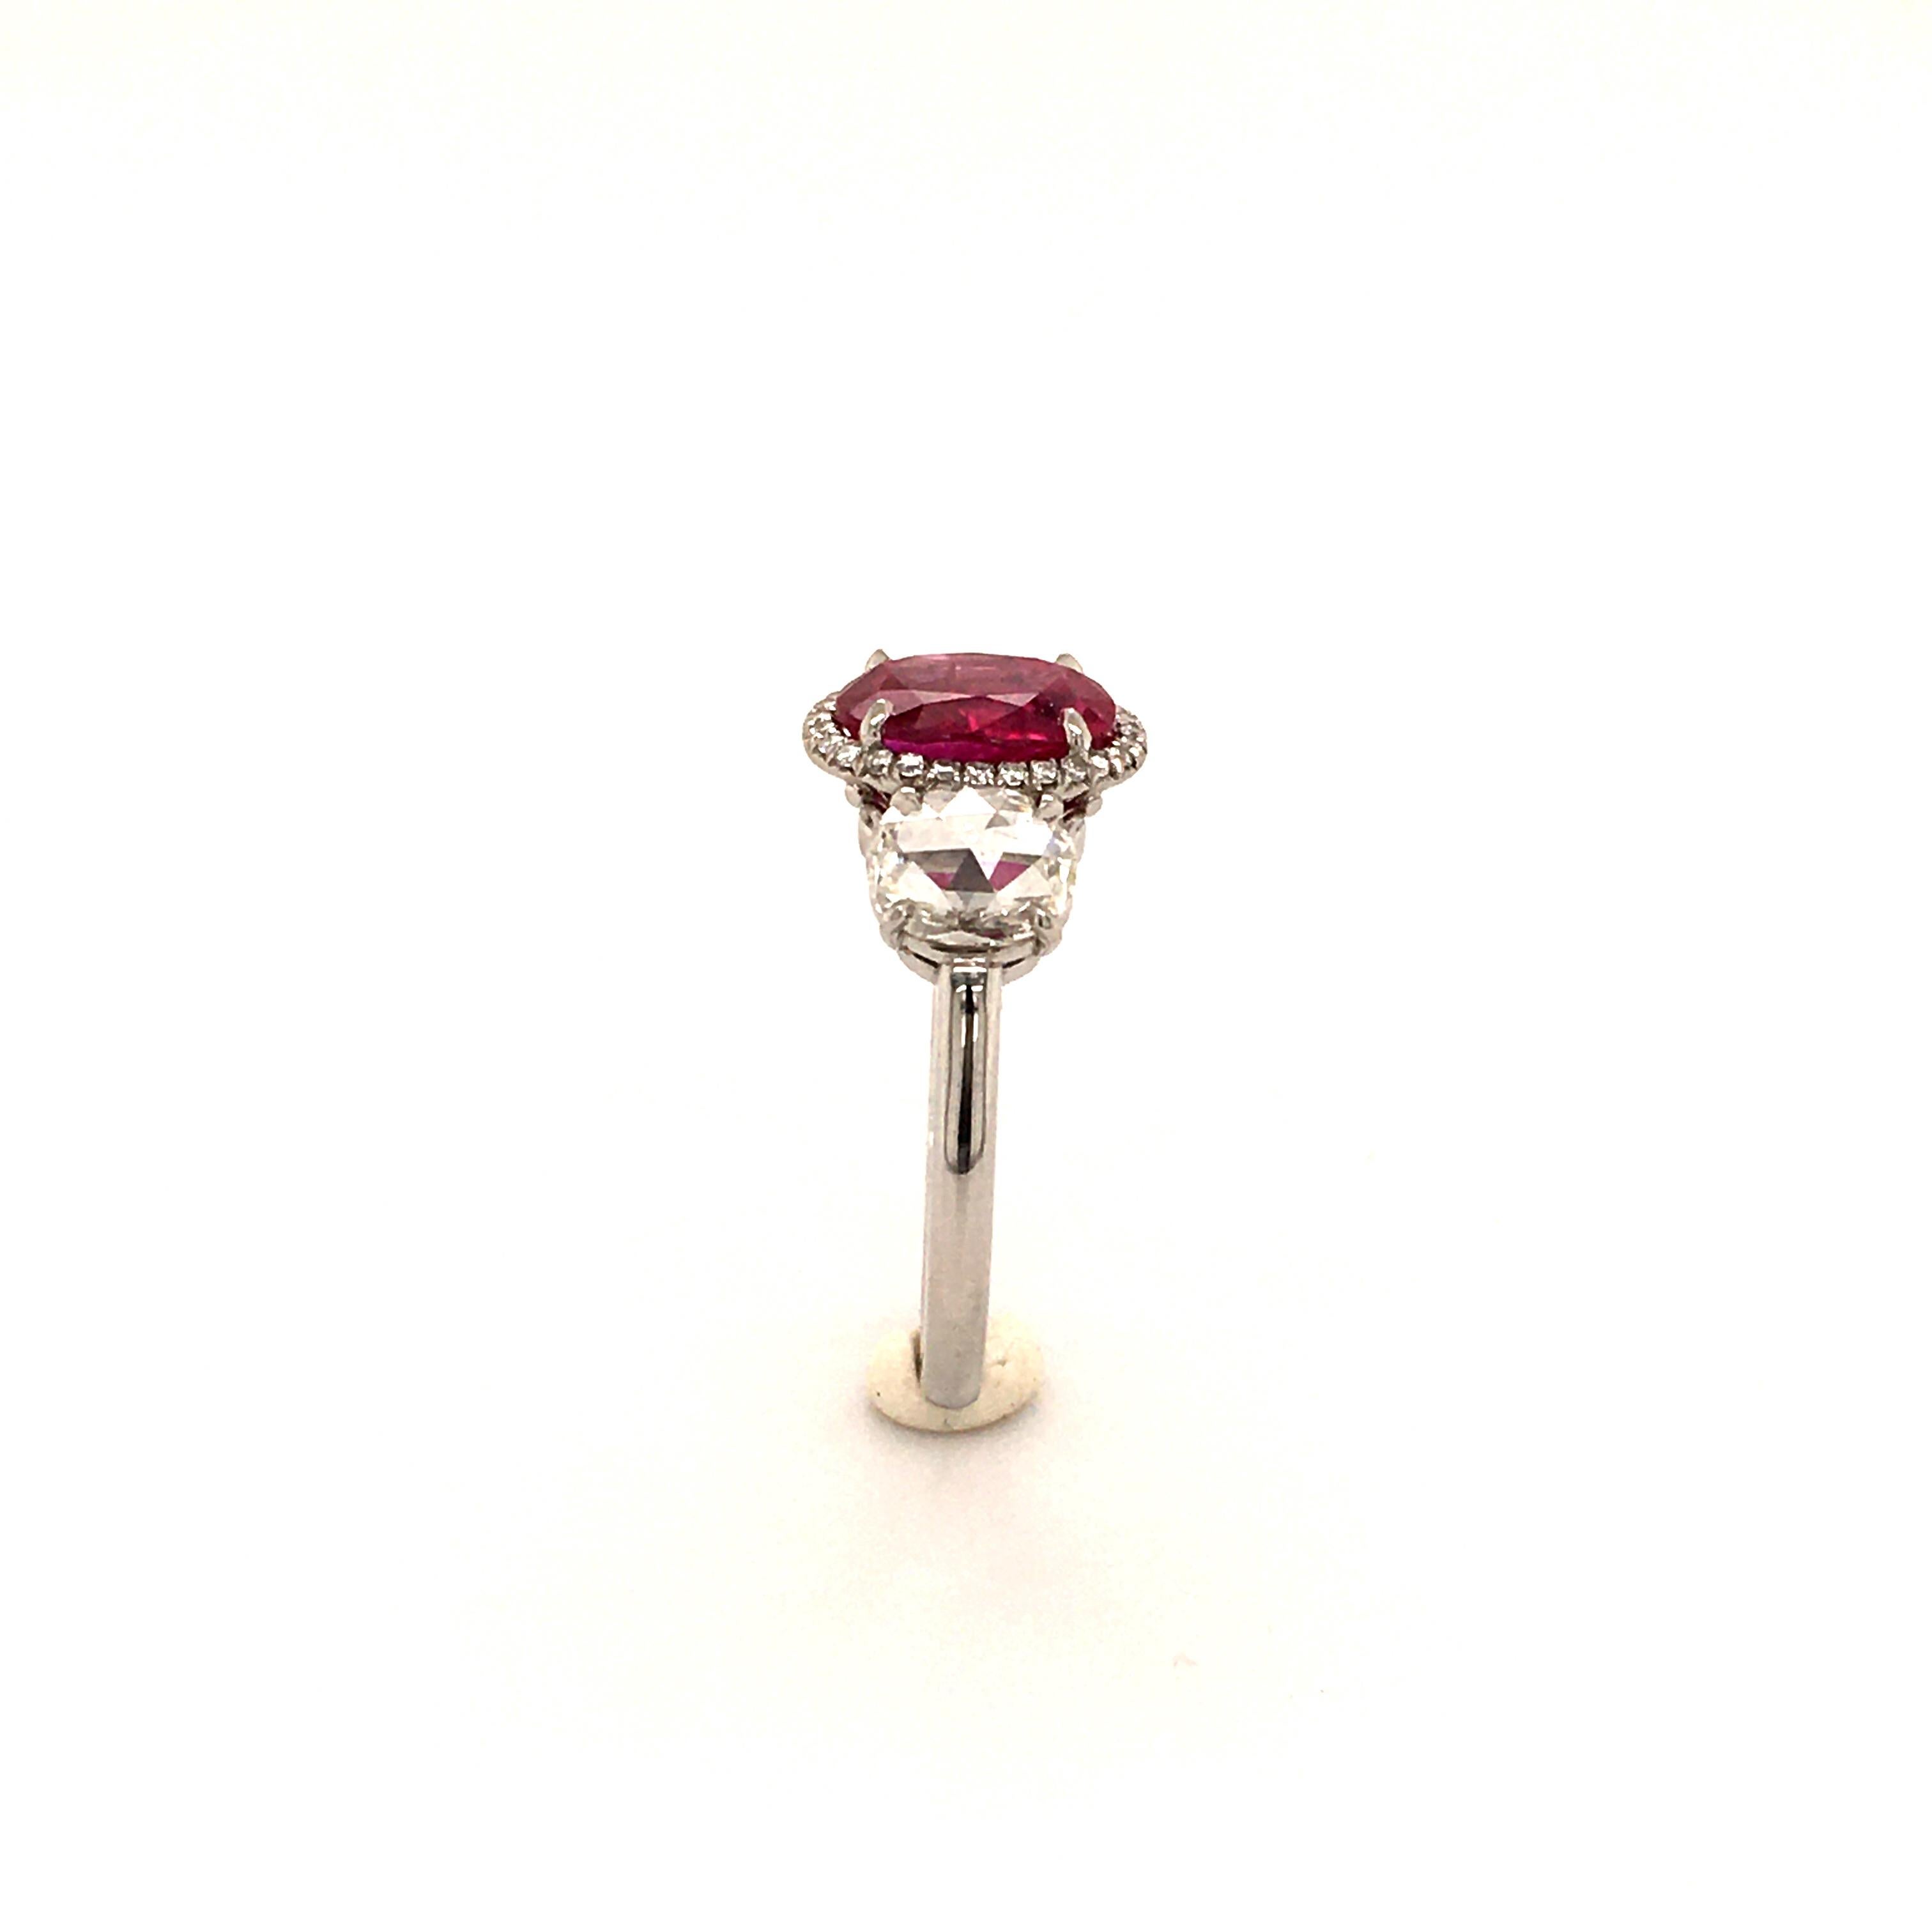 Superb 2.73 Carat Burma Ruby and Diamond Ring in Platinum 950 2